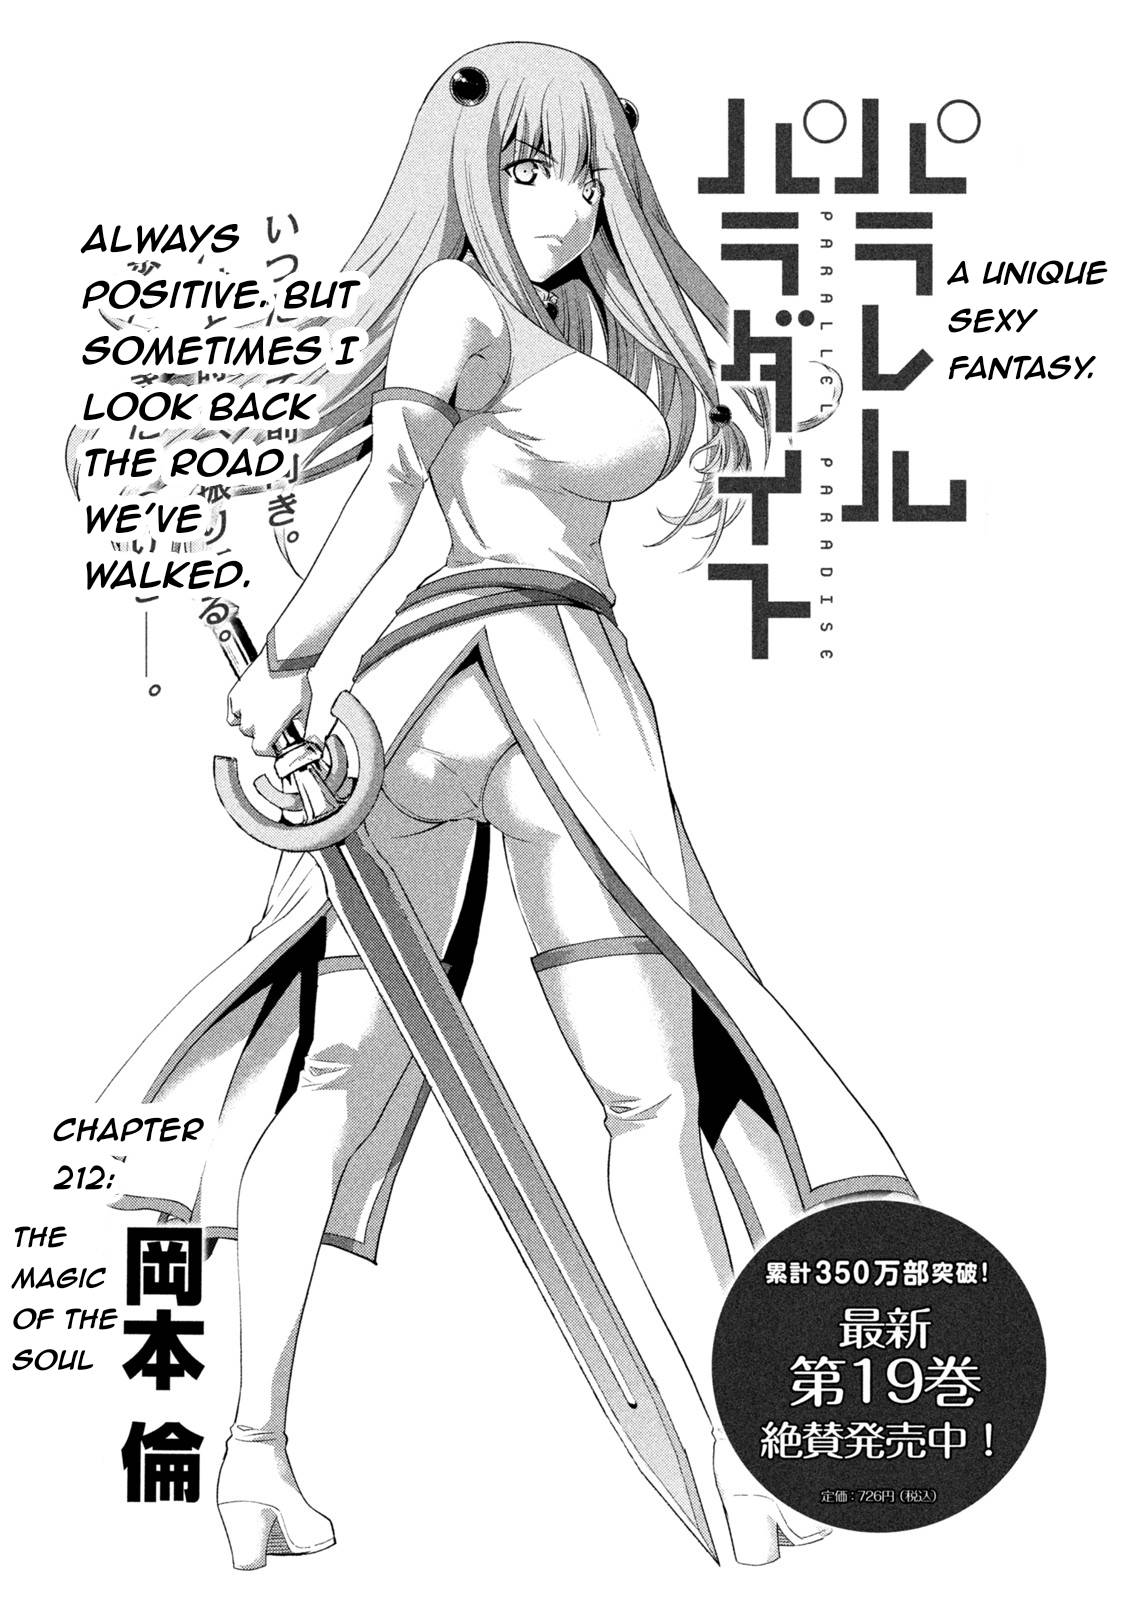 Read Parallel Paradise Manga English [New Chapters] Online Free - MangaClash